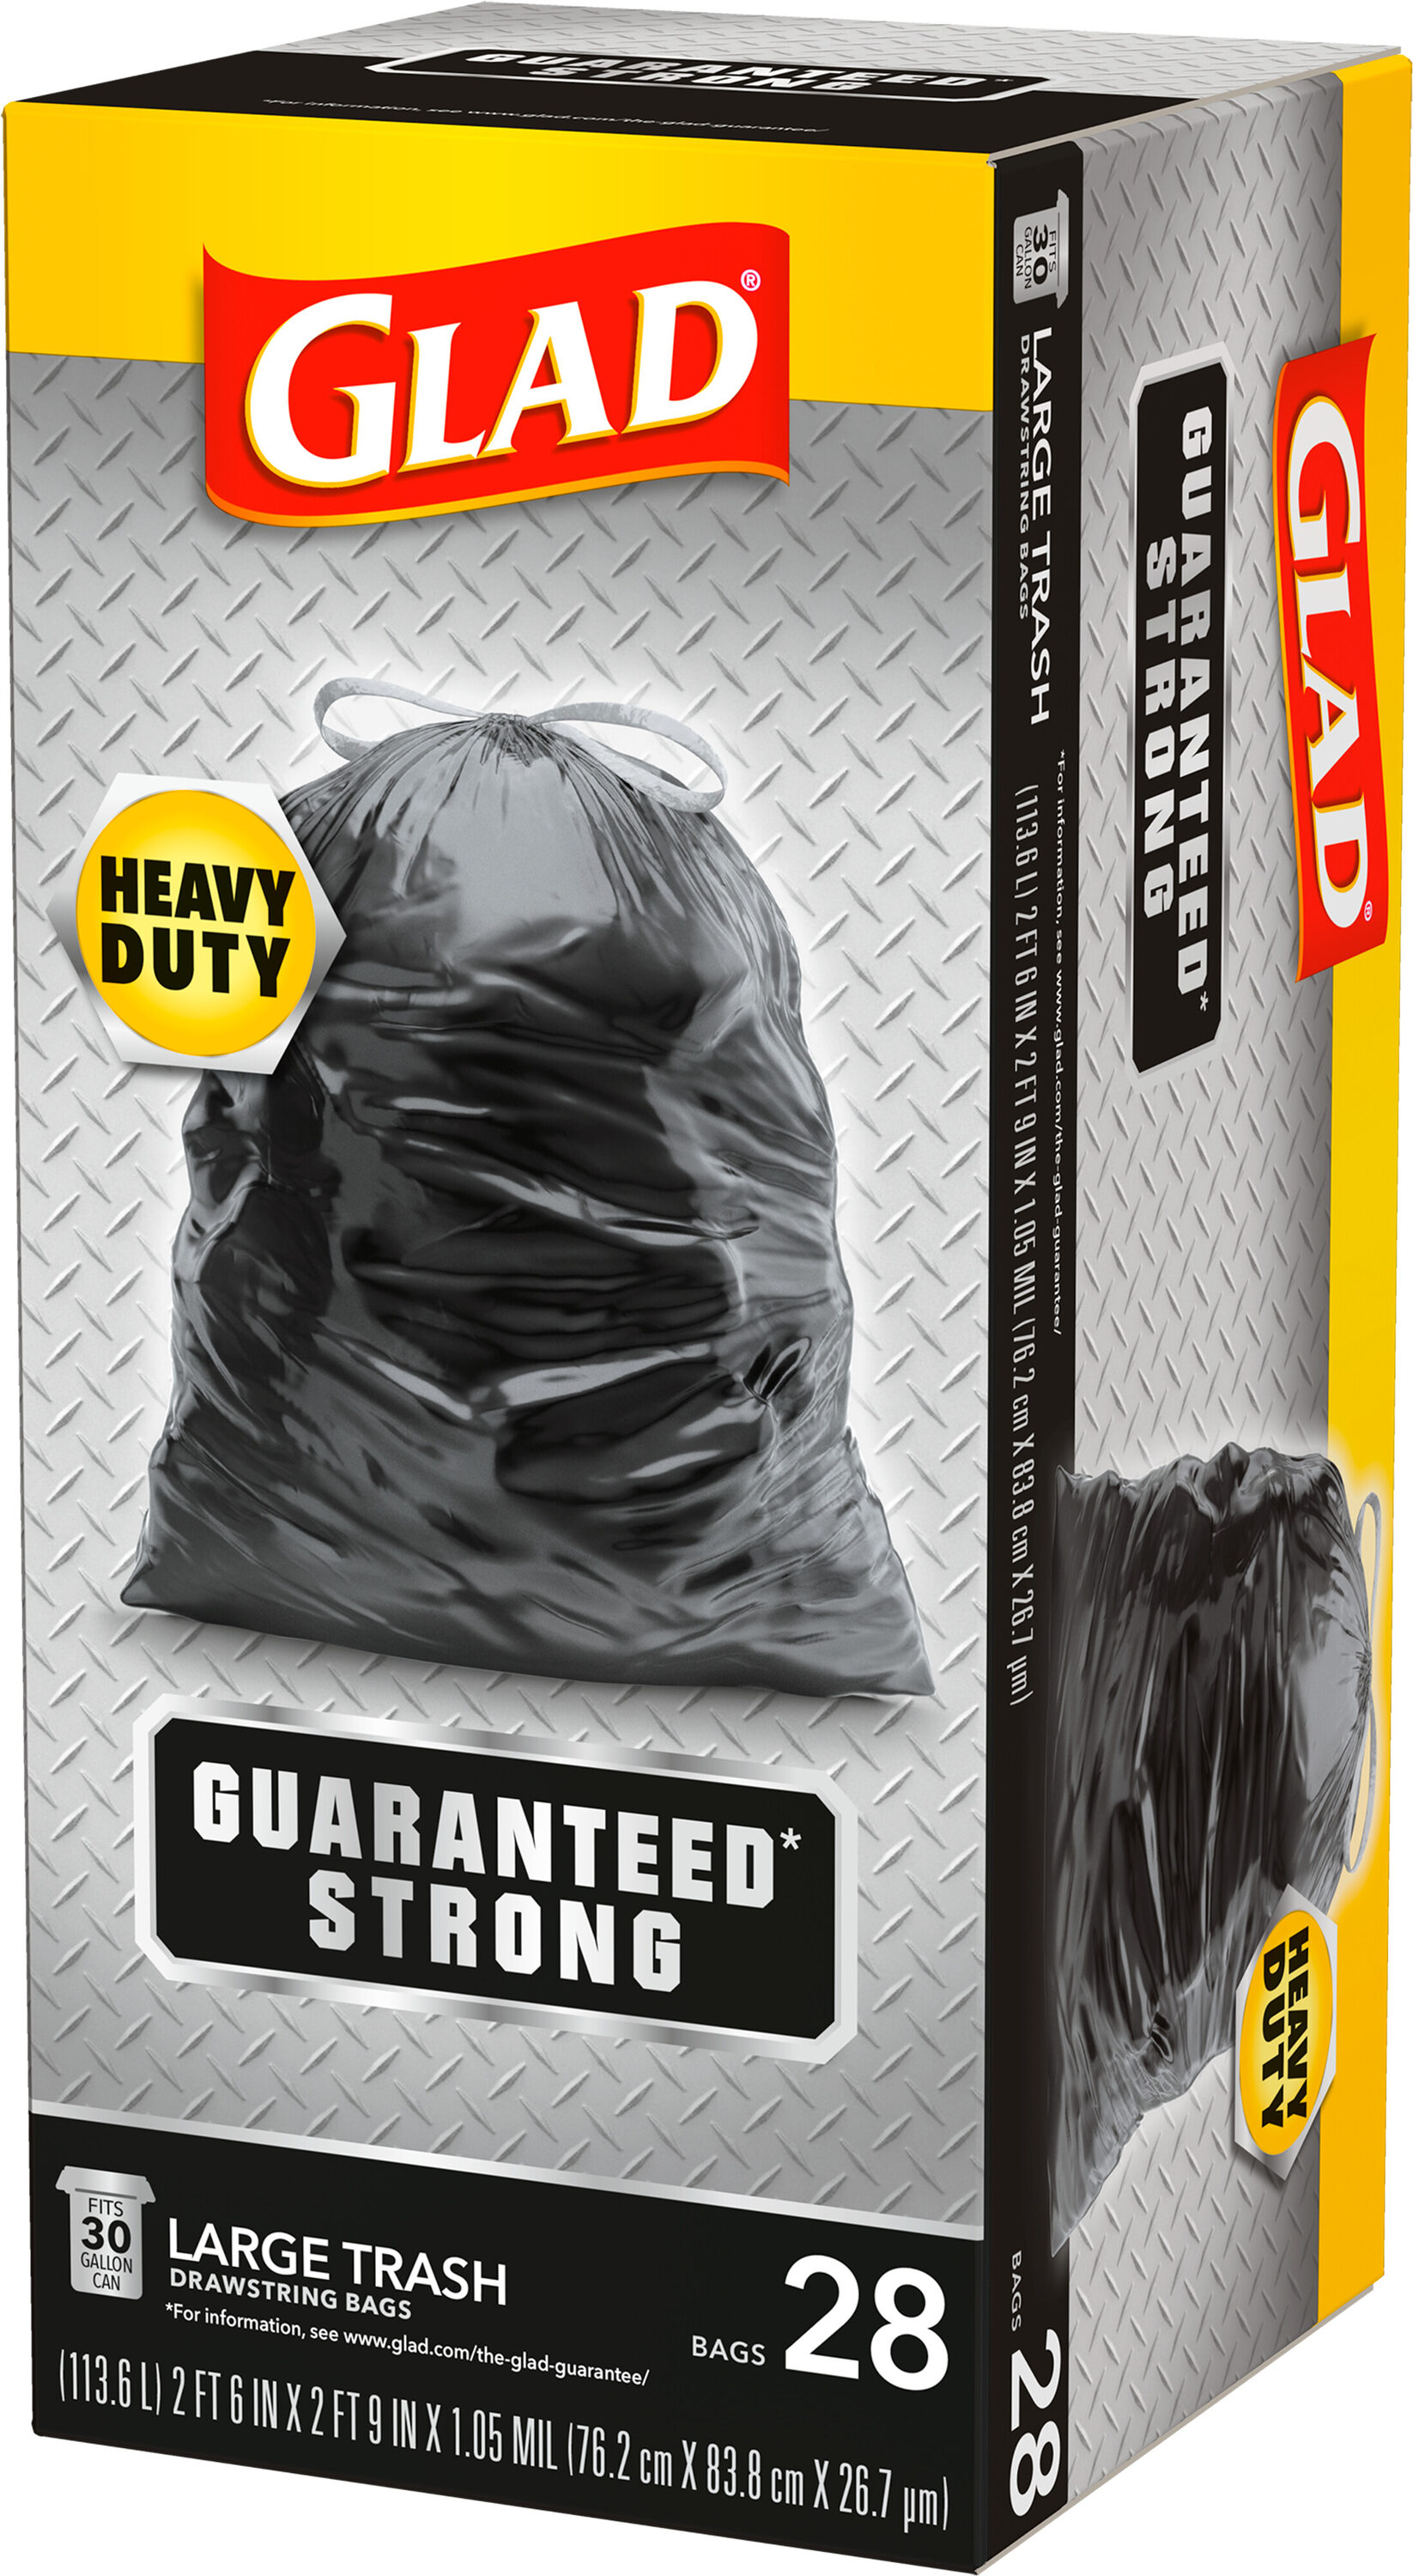 Glad Drawstring 30 Gallon Trash Bags, Black - 90 Count